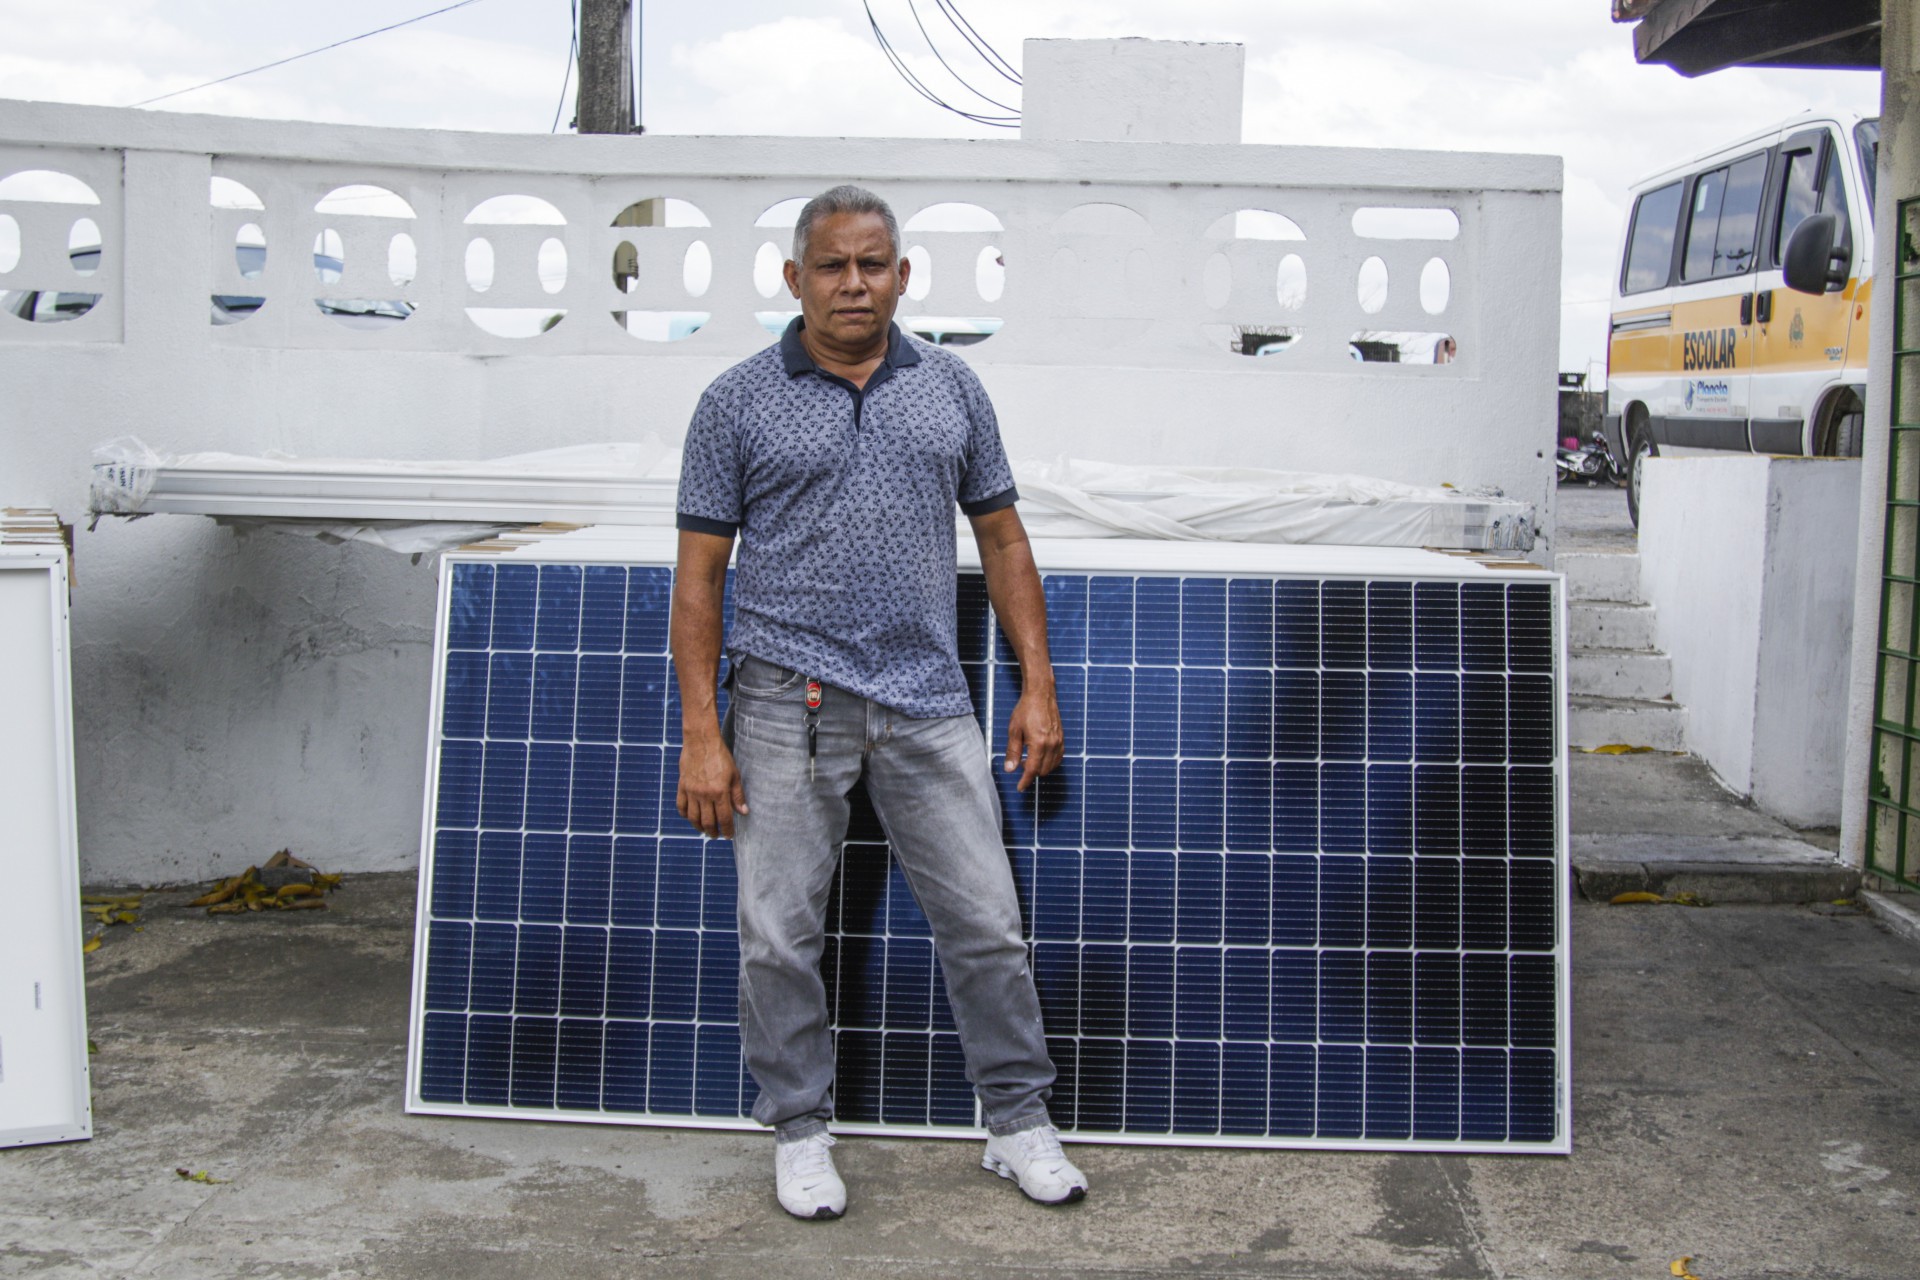 STENIO diz que a entidade migra para a energia solar (Foto: Thais Mesquita)